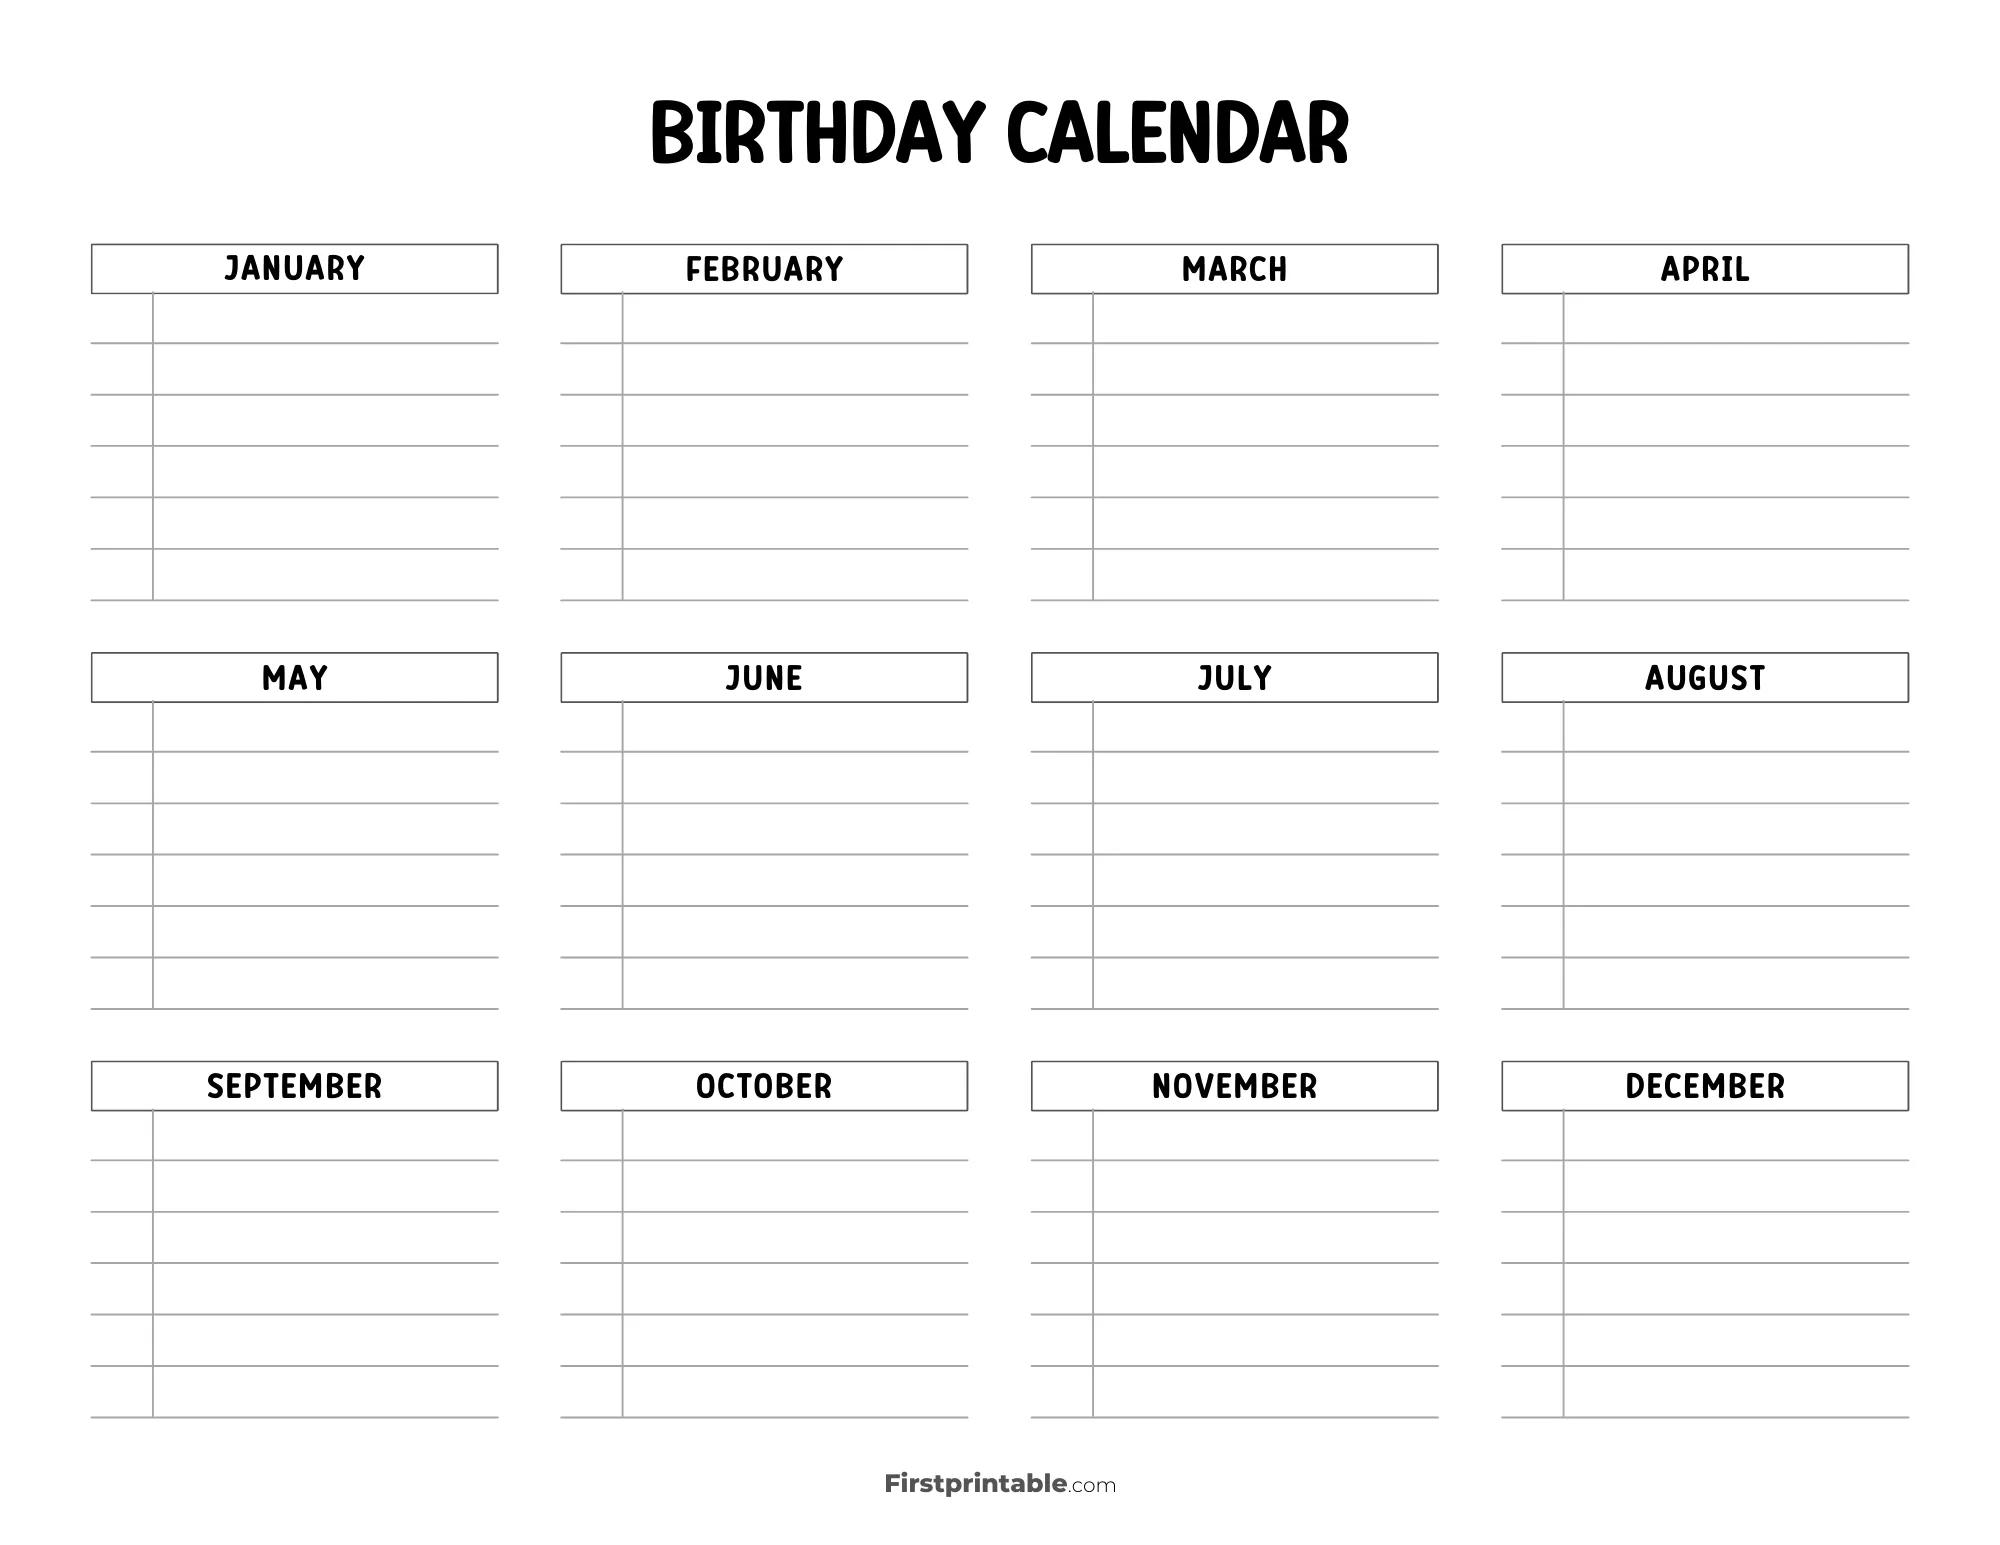 Birthday Calendar Printable Template 20